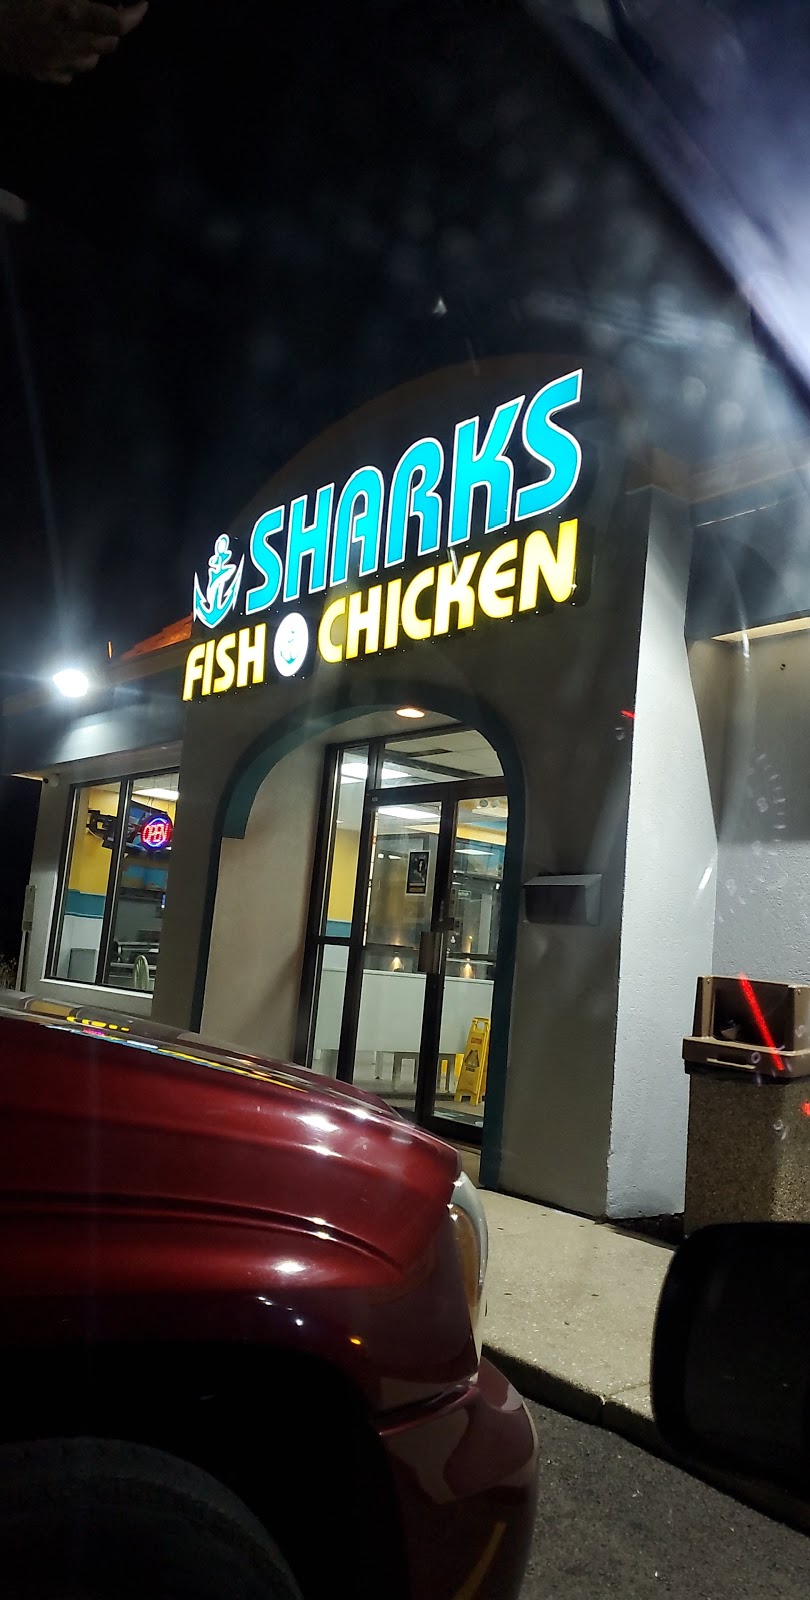 Sharks Fish & Chicken | 7649 S Harlem Ave, Bridgeview, IL 60455, USA | Phone: (708) 701-2969